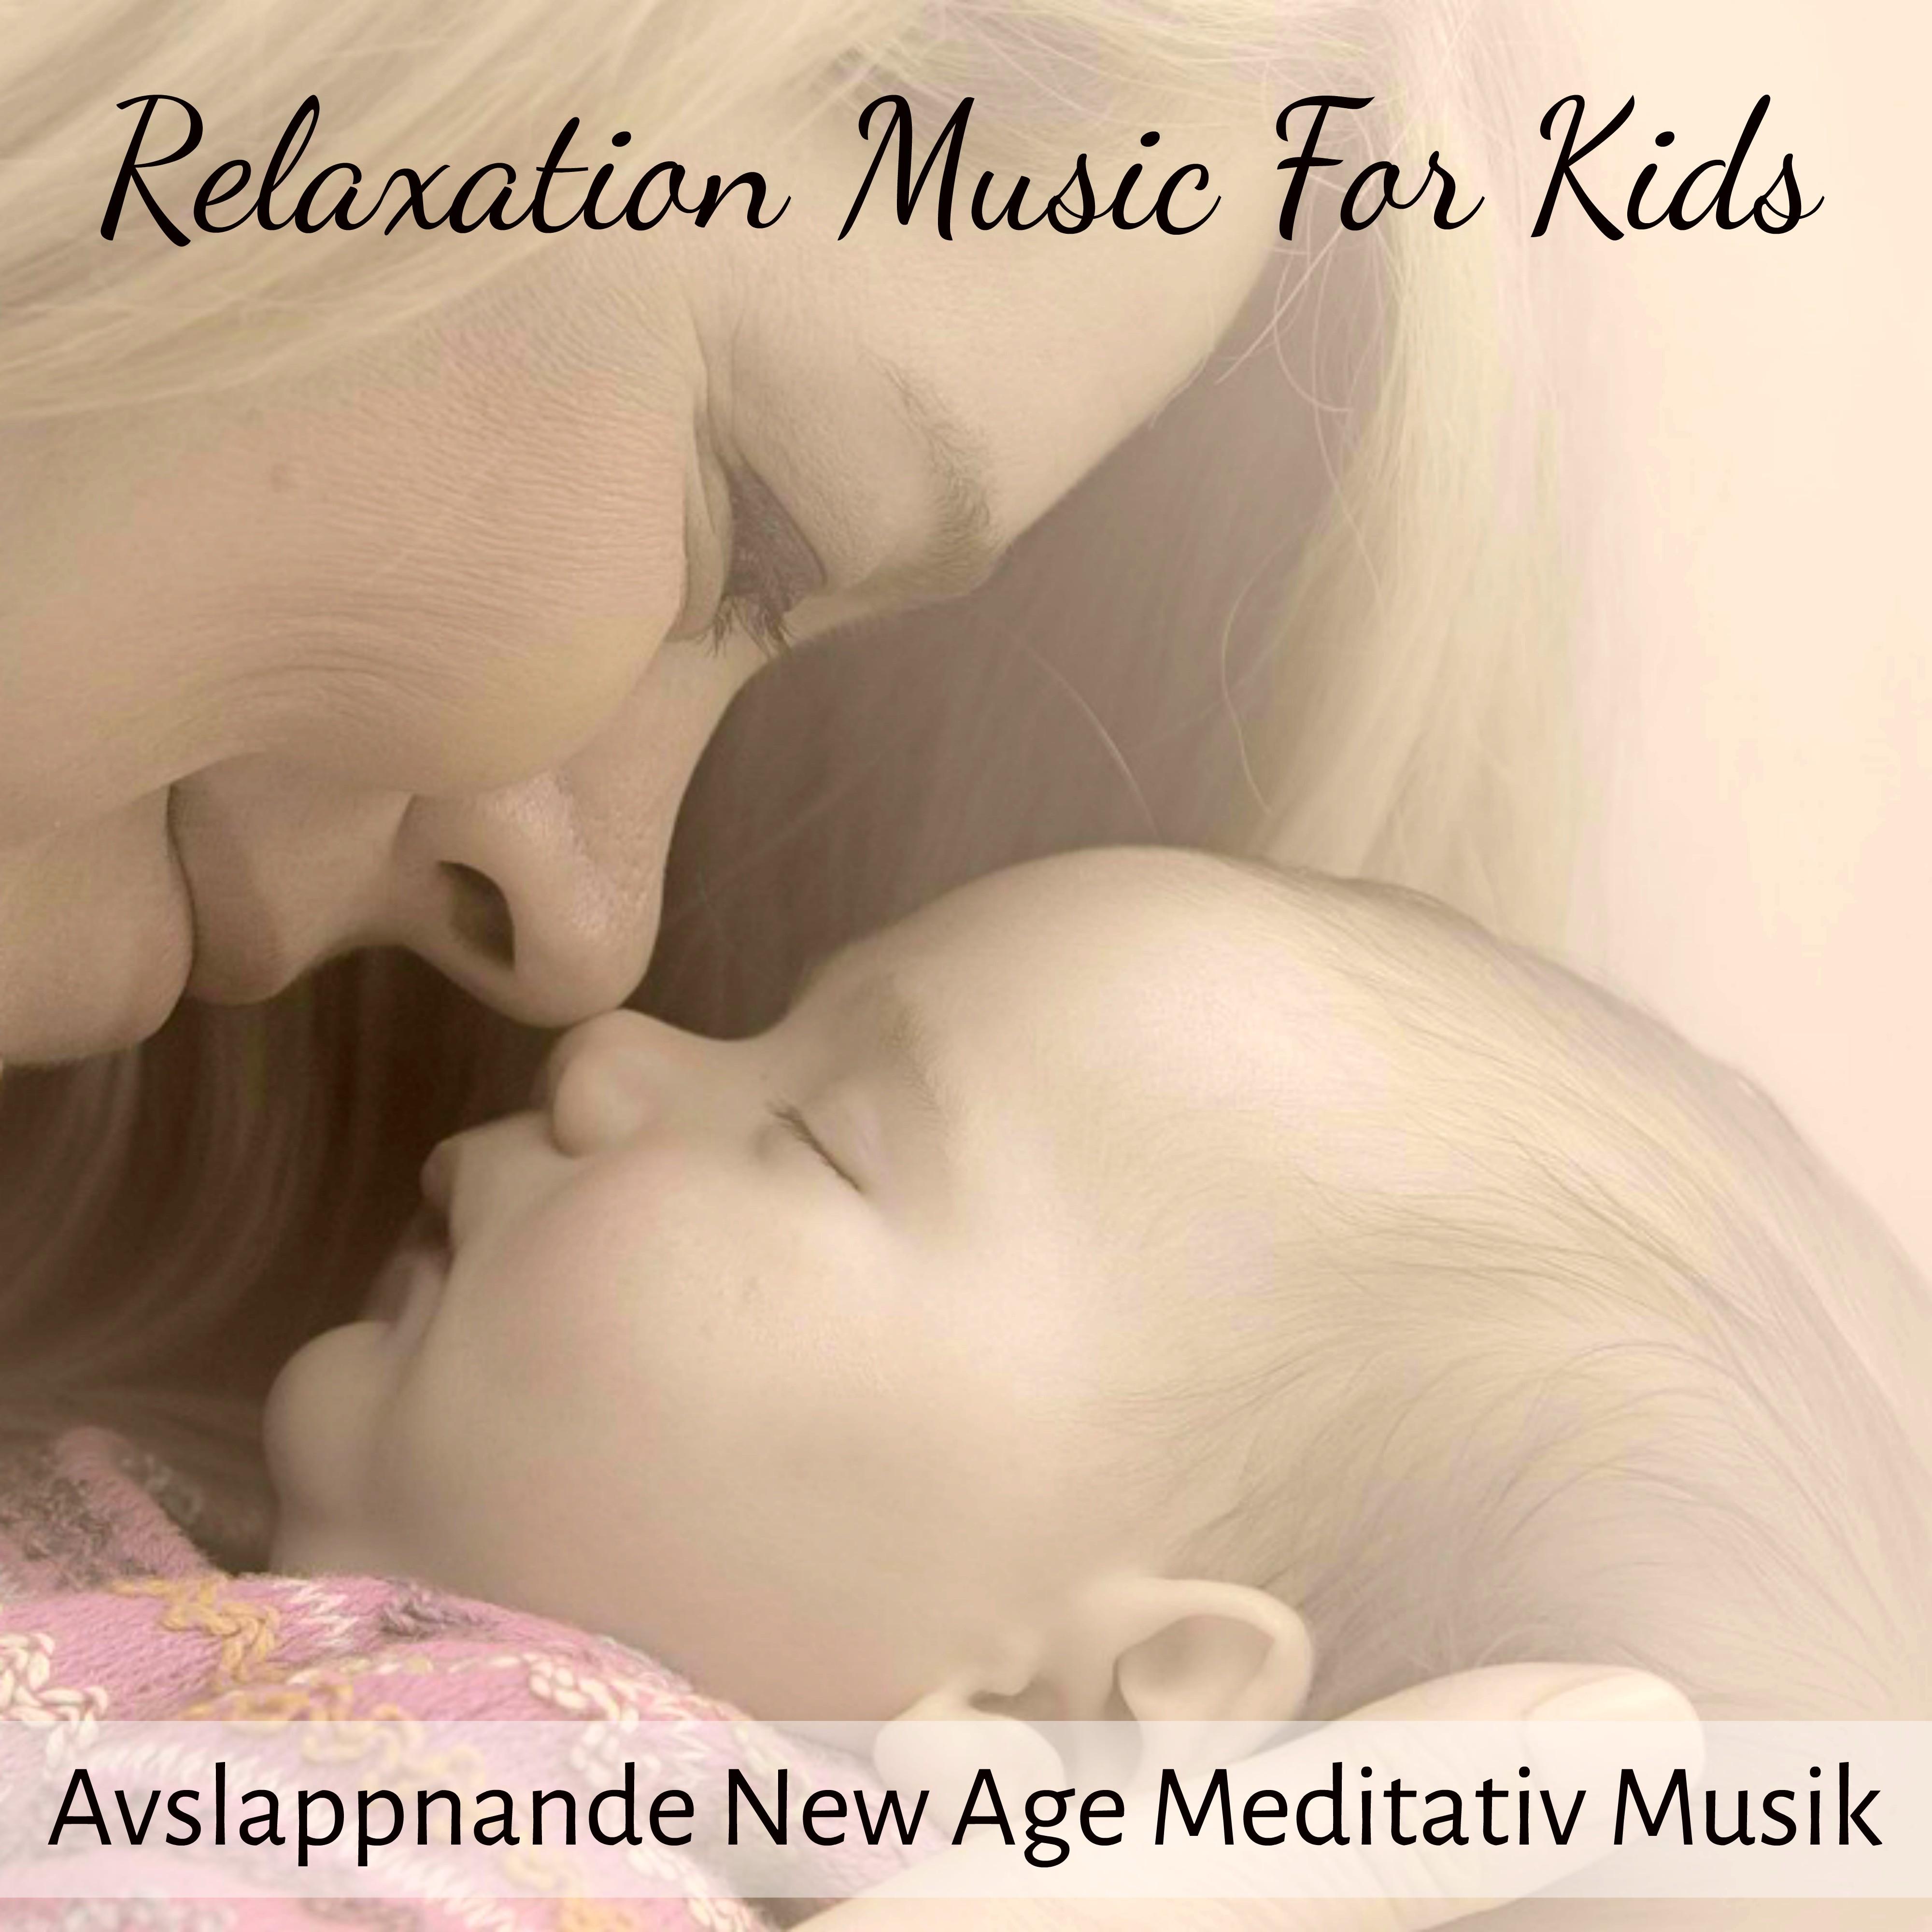 Relaxation Music For Kids  Avslappnande New Age Meditativ Musik f r Vaggvisor Skydds ngel Lucida Dr mmar och Minska ngest